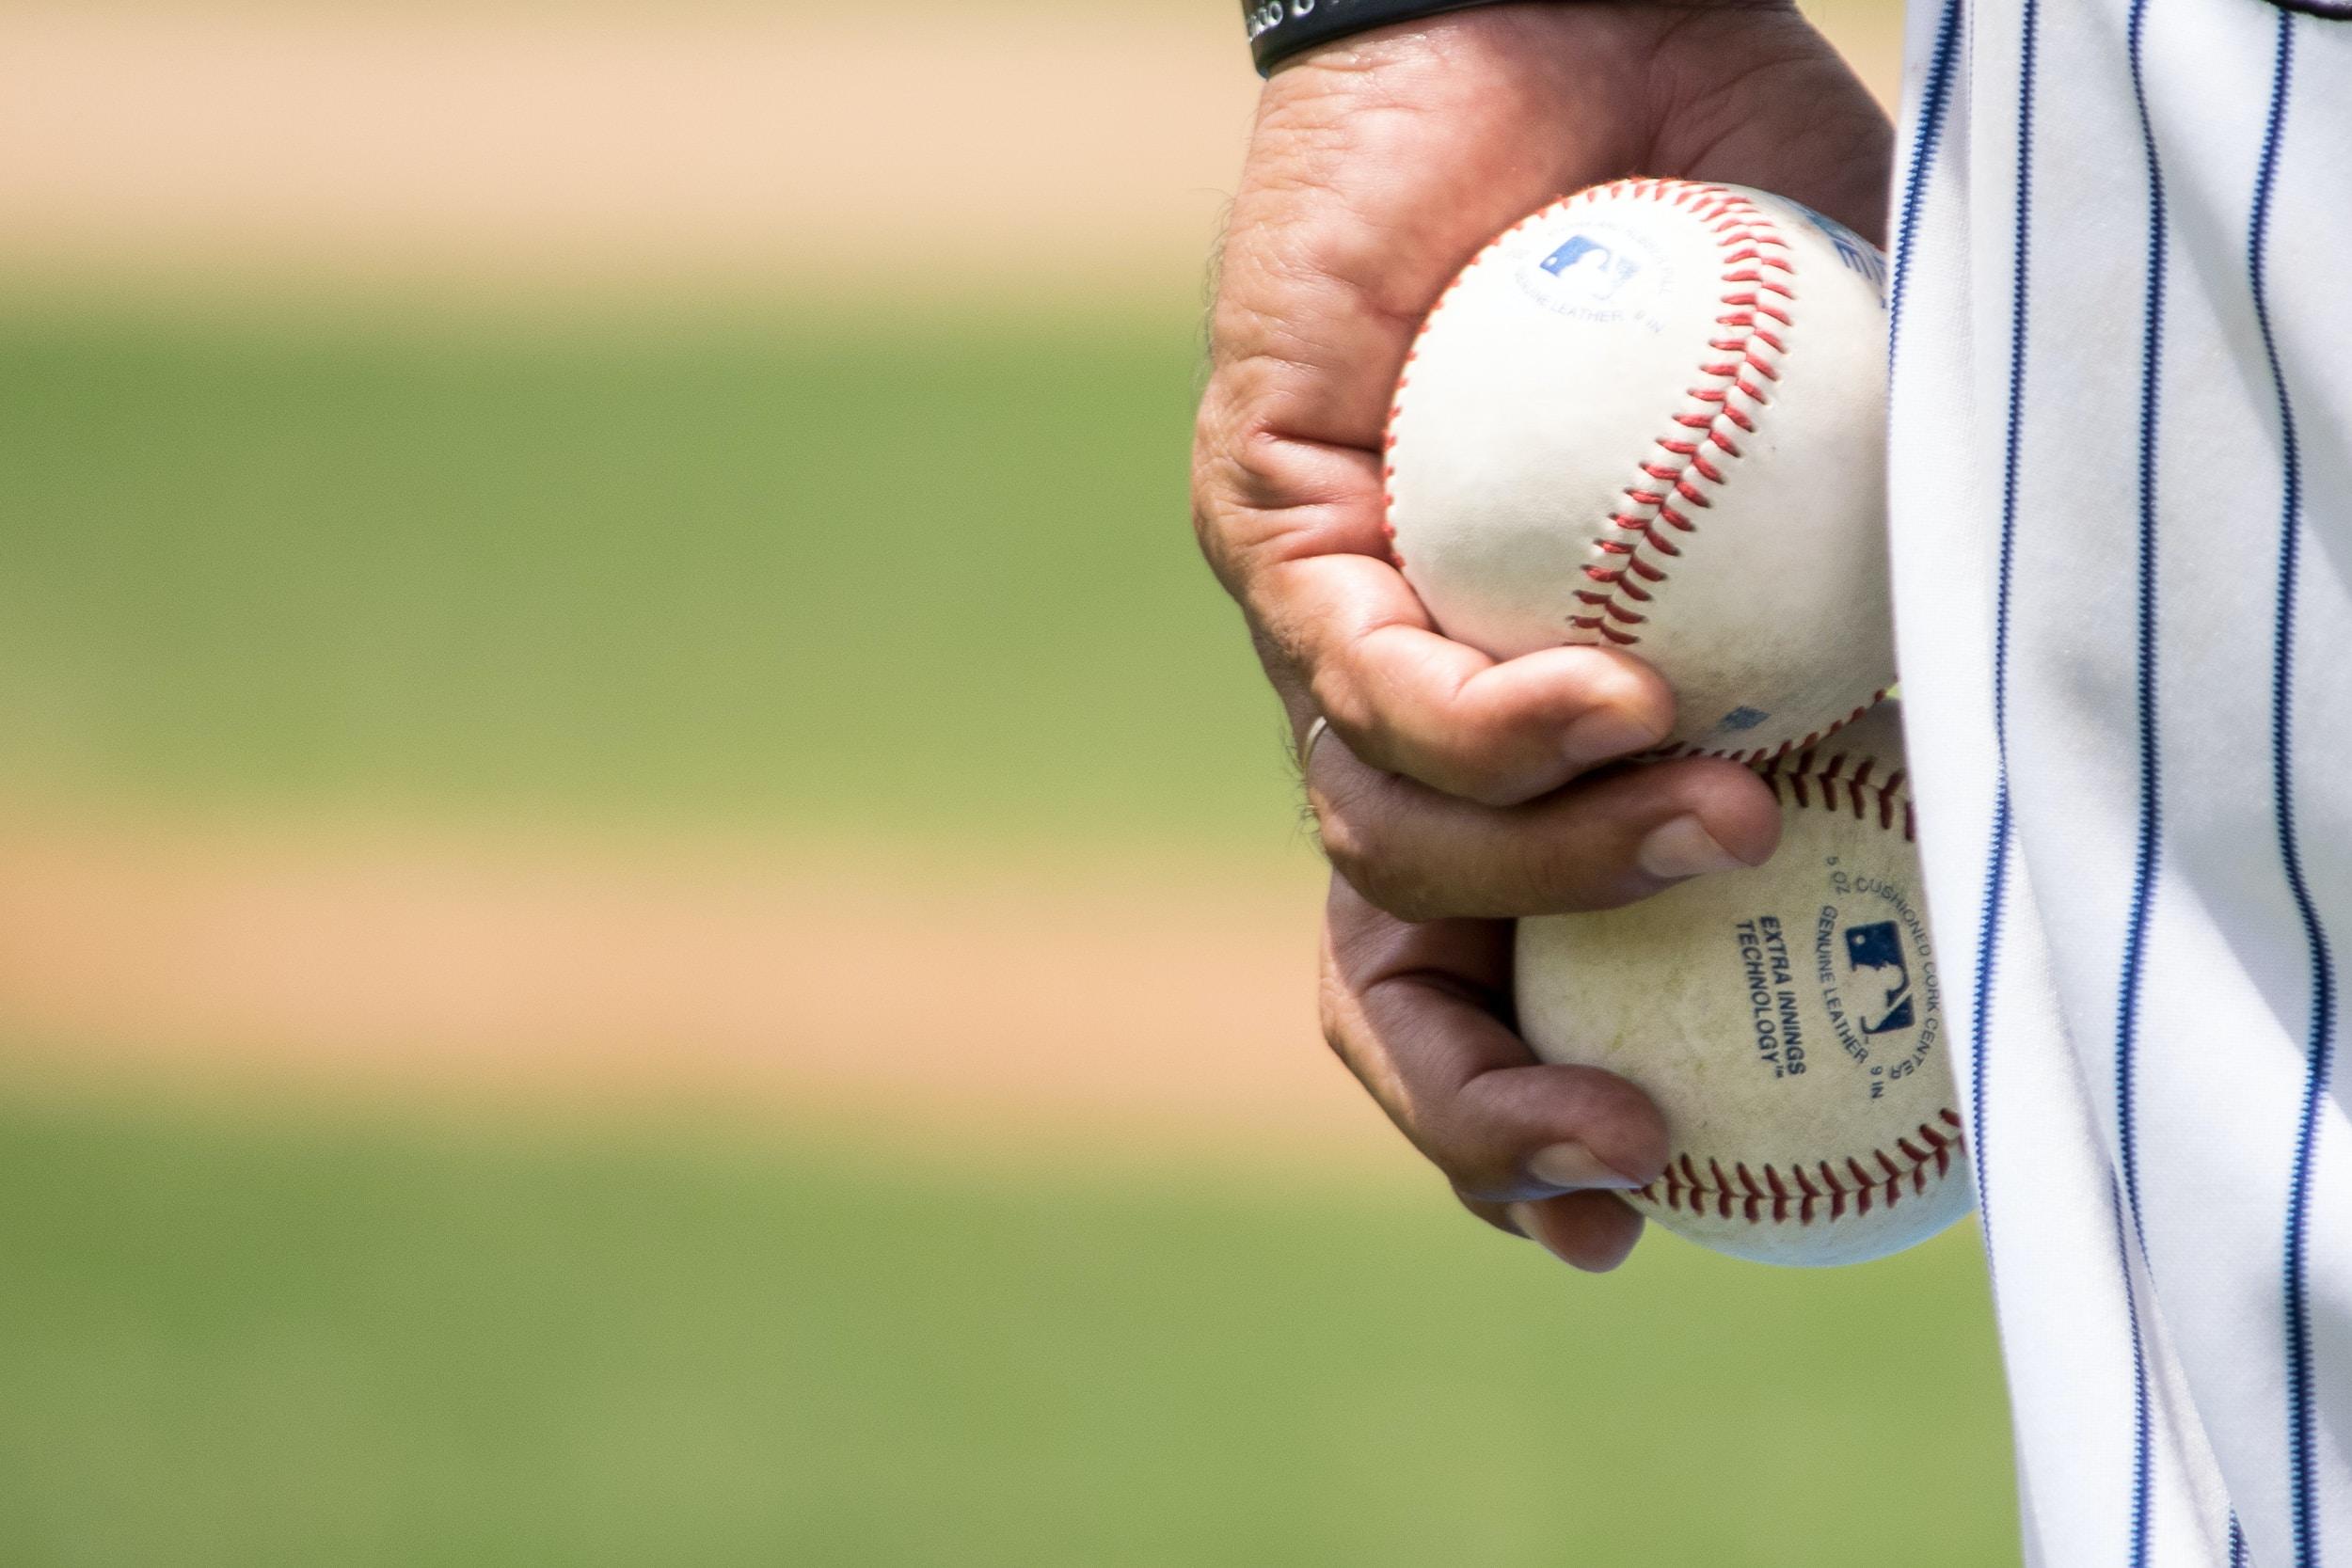 A pitcher holding 2 MLB Baseballs